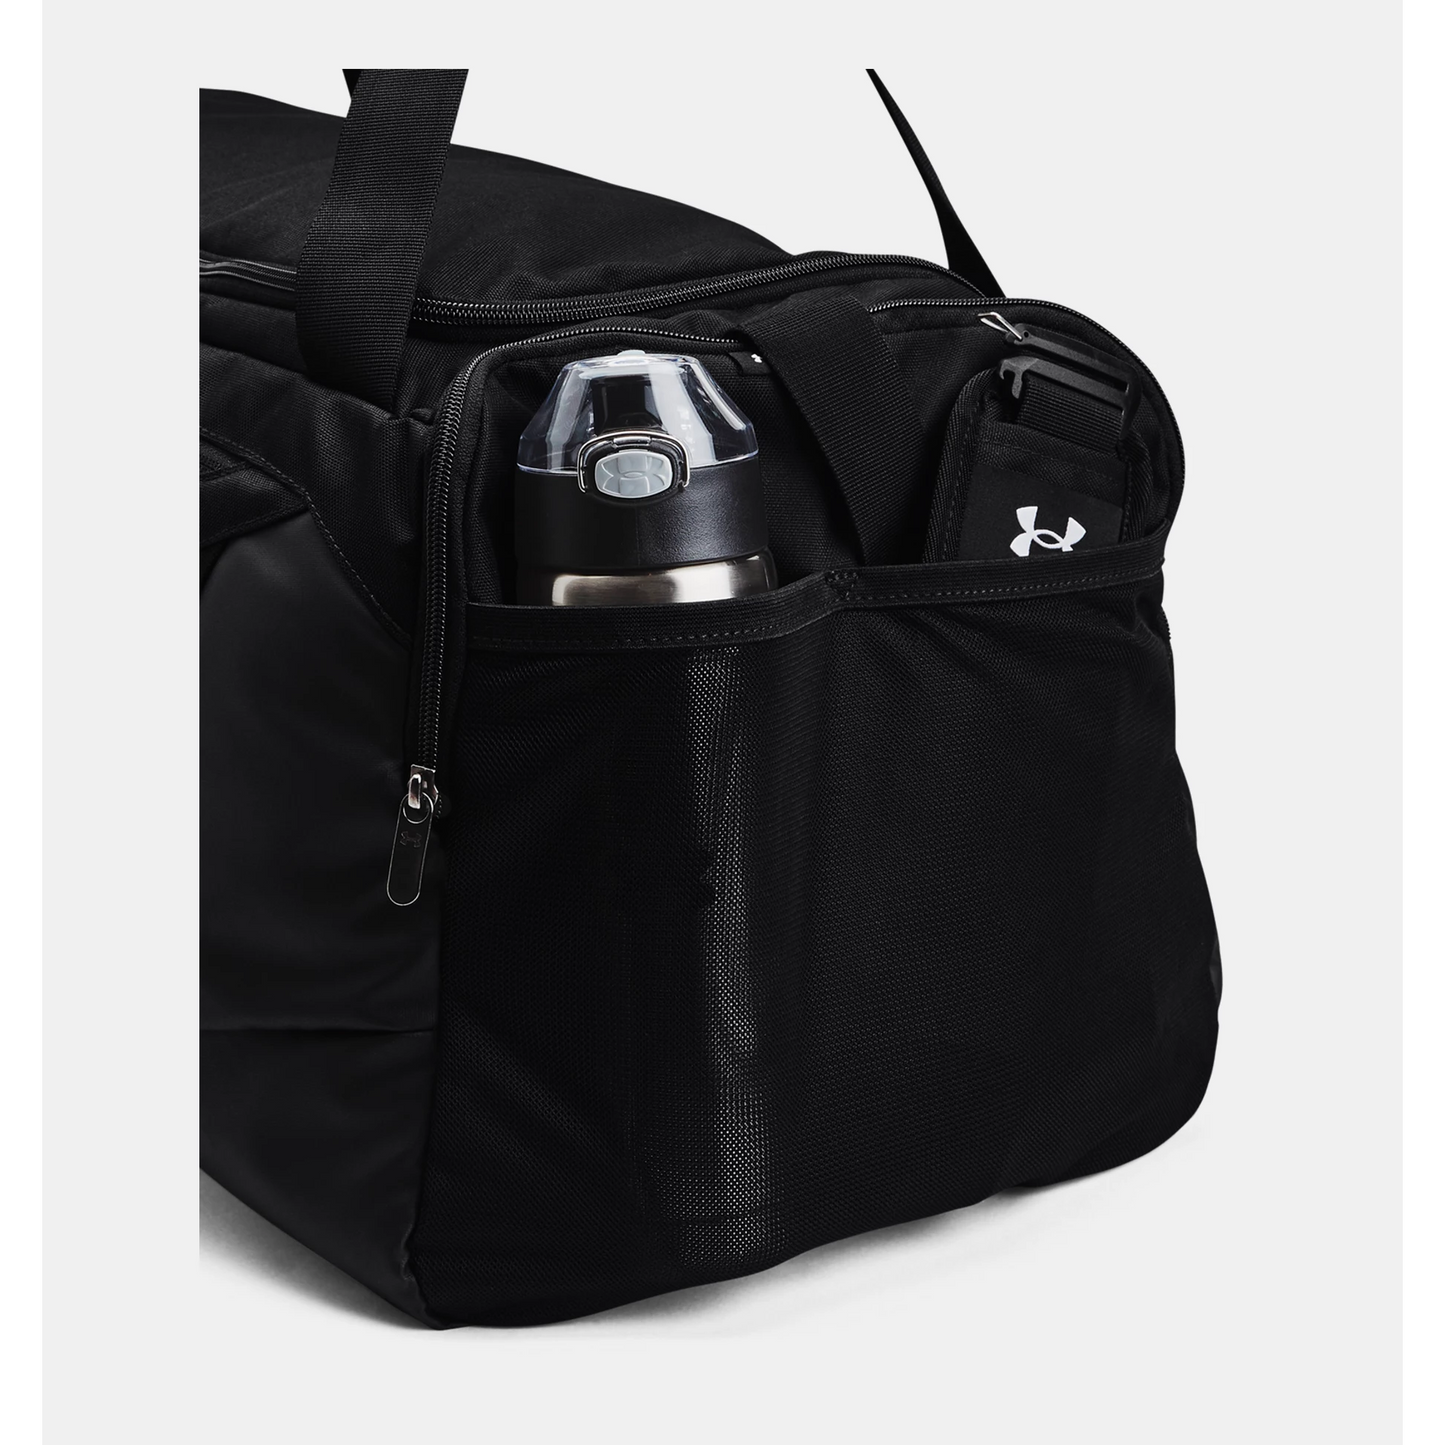 Under Armor Undeniable 5.0 Medium Duffle Bag, Multiple Colors Available